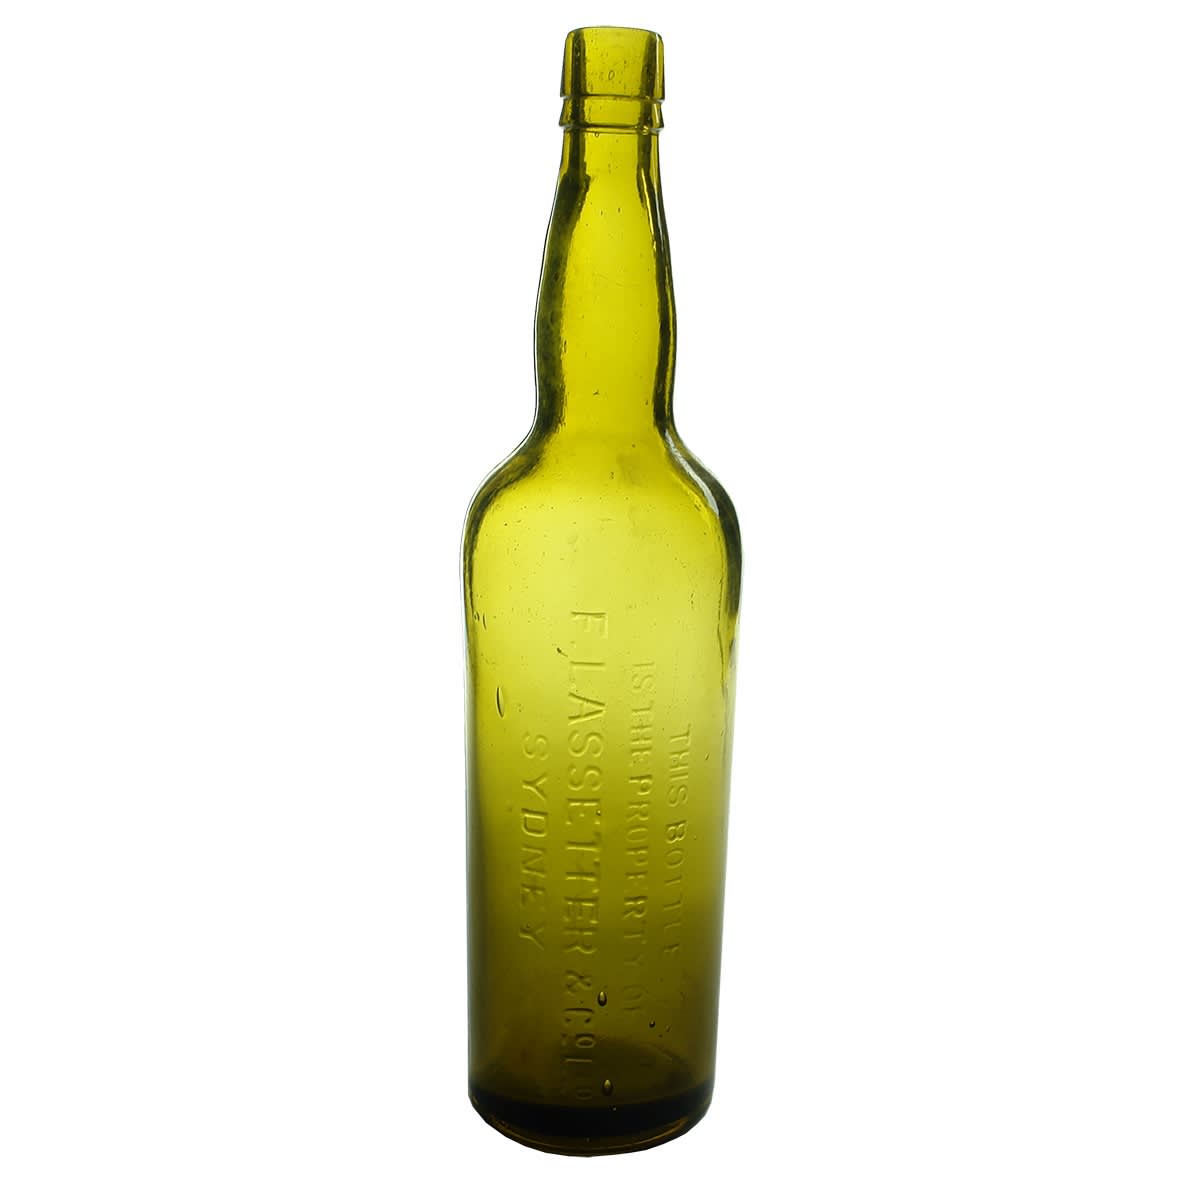 Wine or Spirits. F. Lassetter & Co Ltd, Sydney. Dark Honey Amber. 26 oz. (New South Wales)